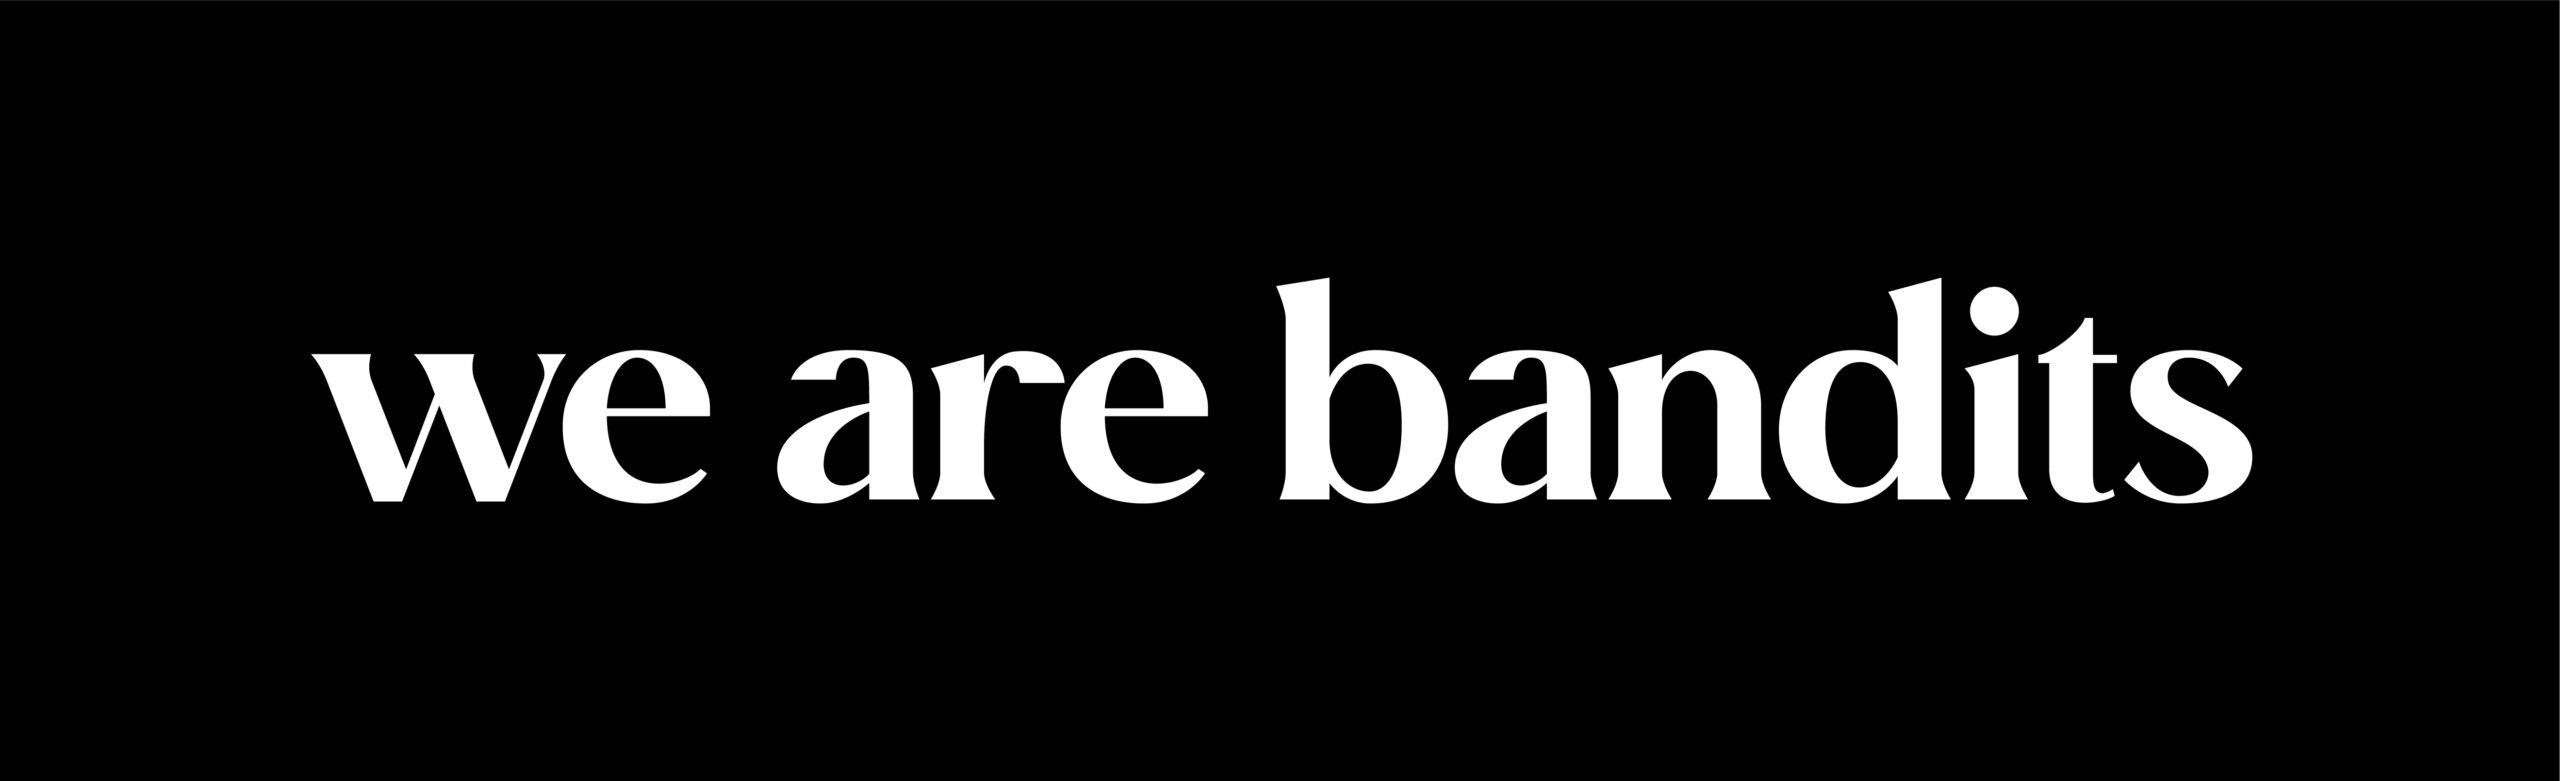 we are bandits logo